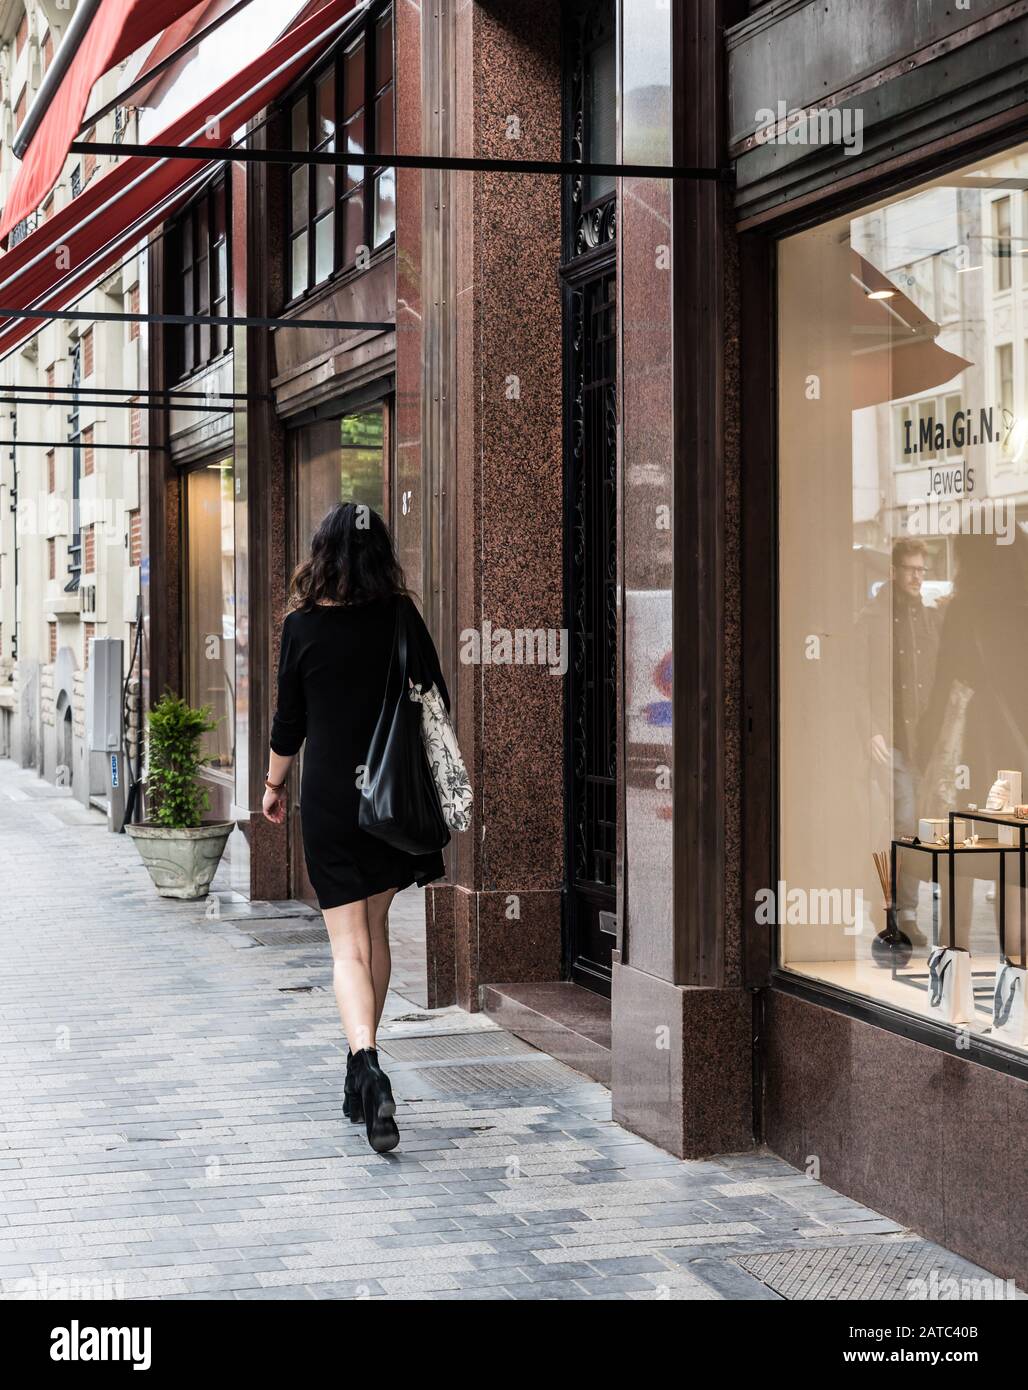 Brussels Old Town / Belgium - 06 07 2019: Stylish beautiful woman in black dress walking through the upscale shopping street Dansaert Stock Photo